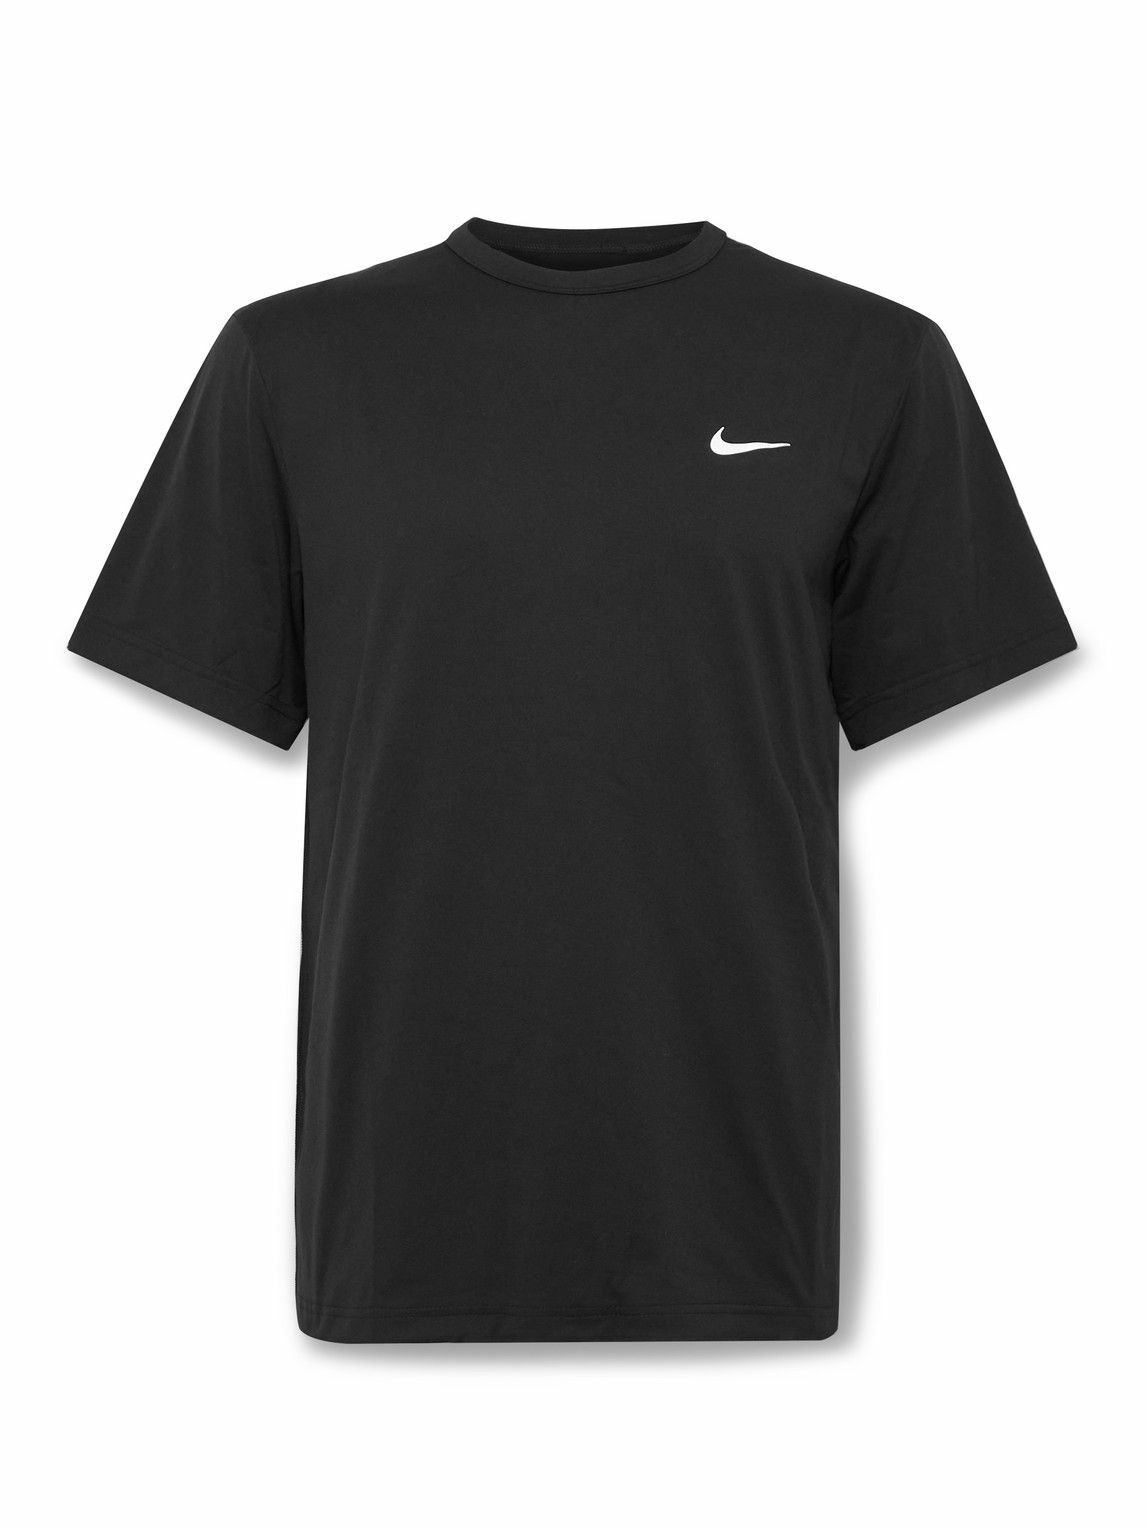 Nike Training - Hyverse Dri-FIT T-Shirt - Black Nike Training